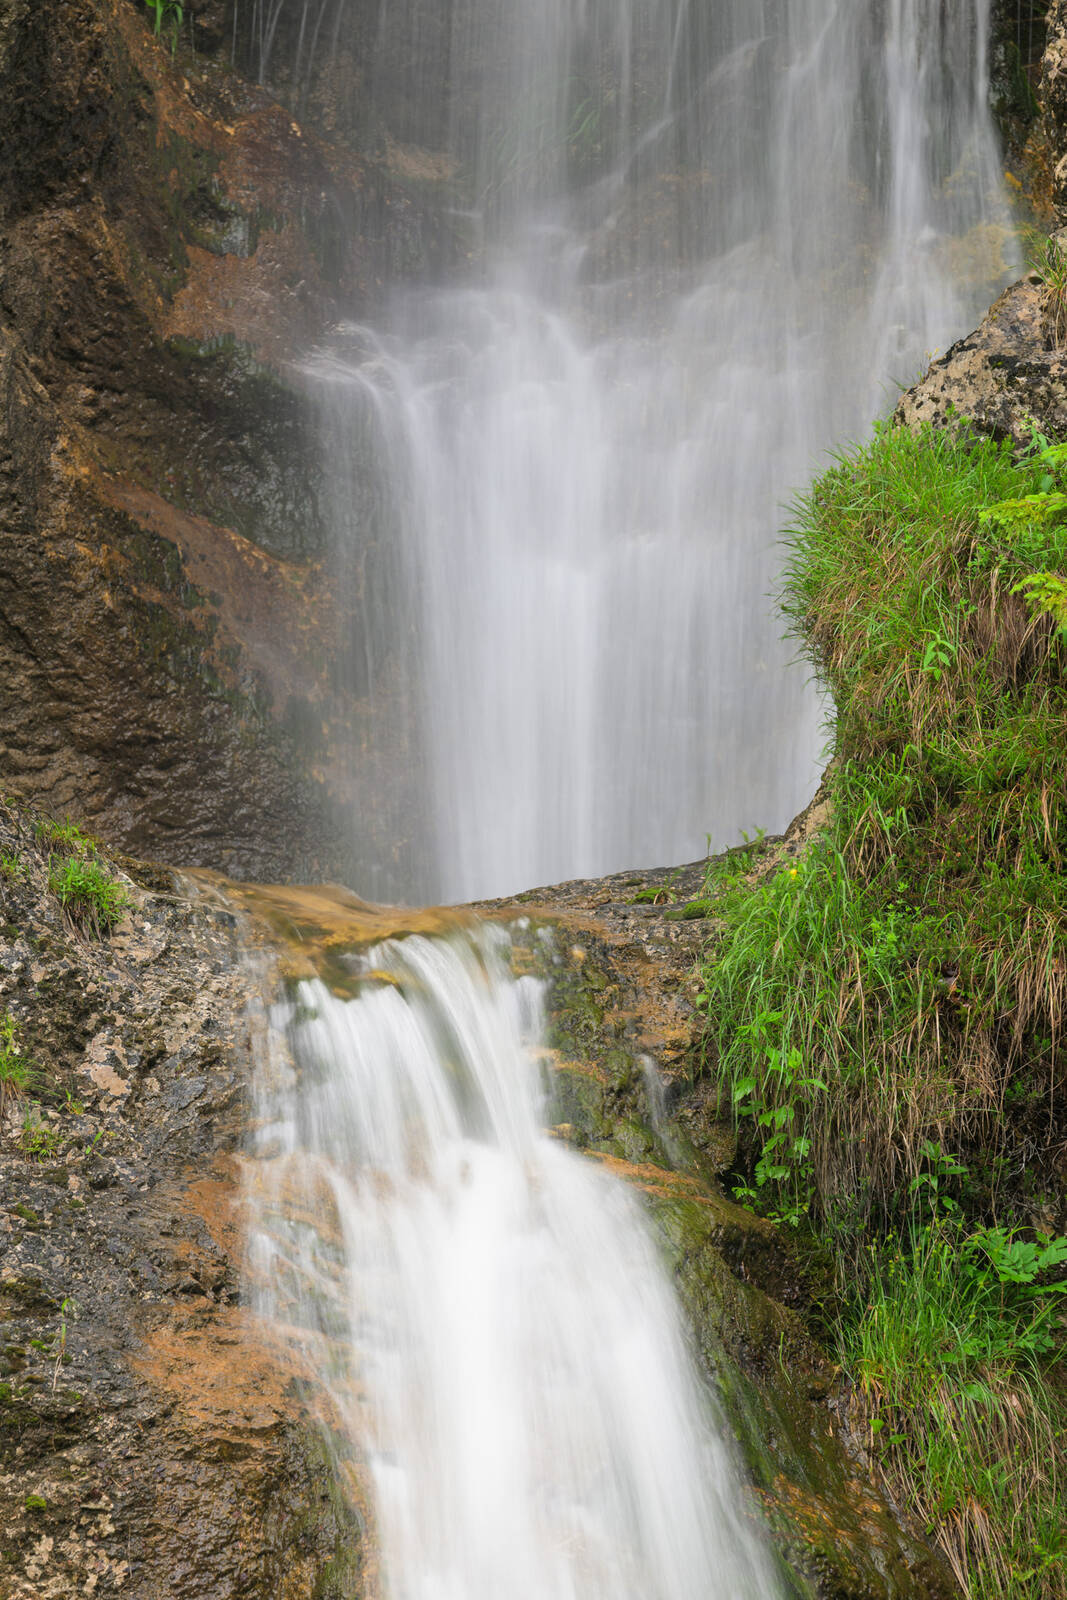 Image of Repov Slap (Rep Waterfall) by Luka Esenko